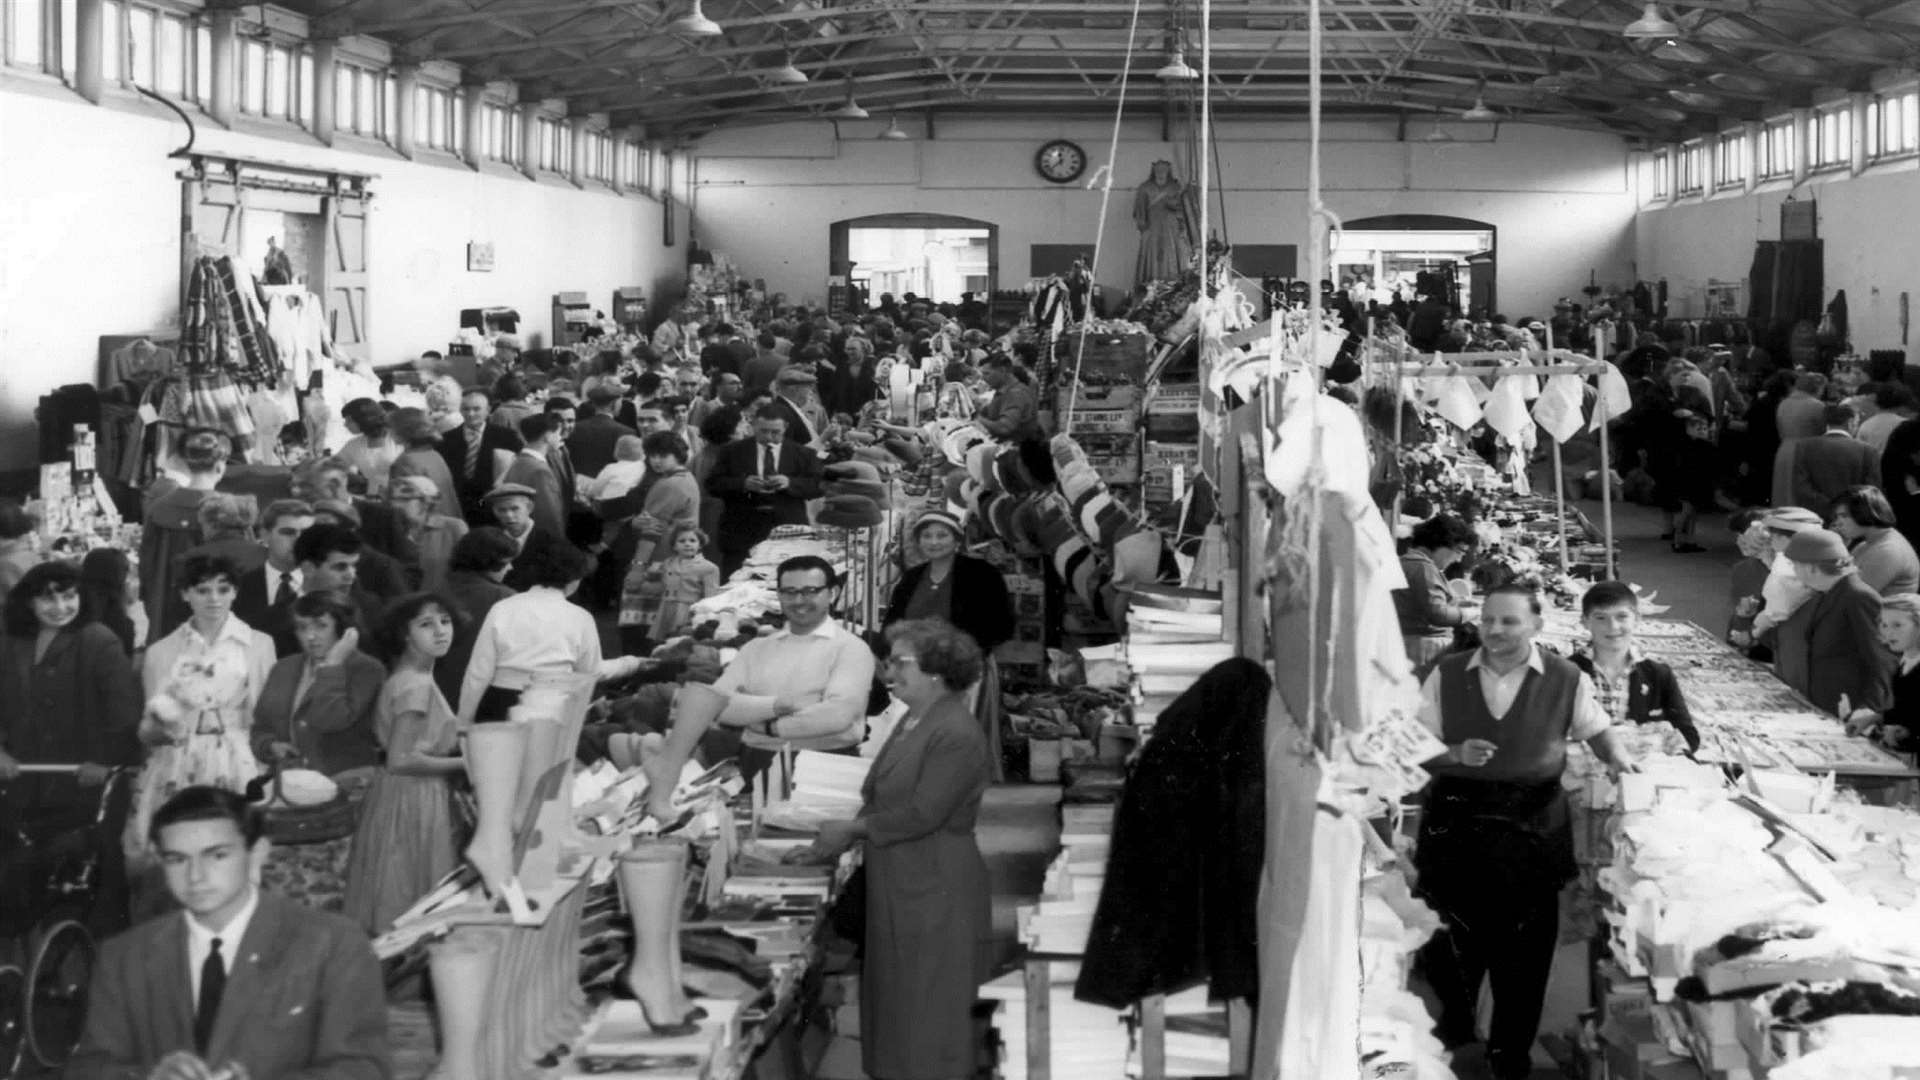 Typical Saturday morning scene in Gravesend market in 1959